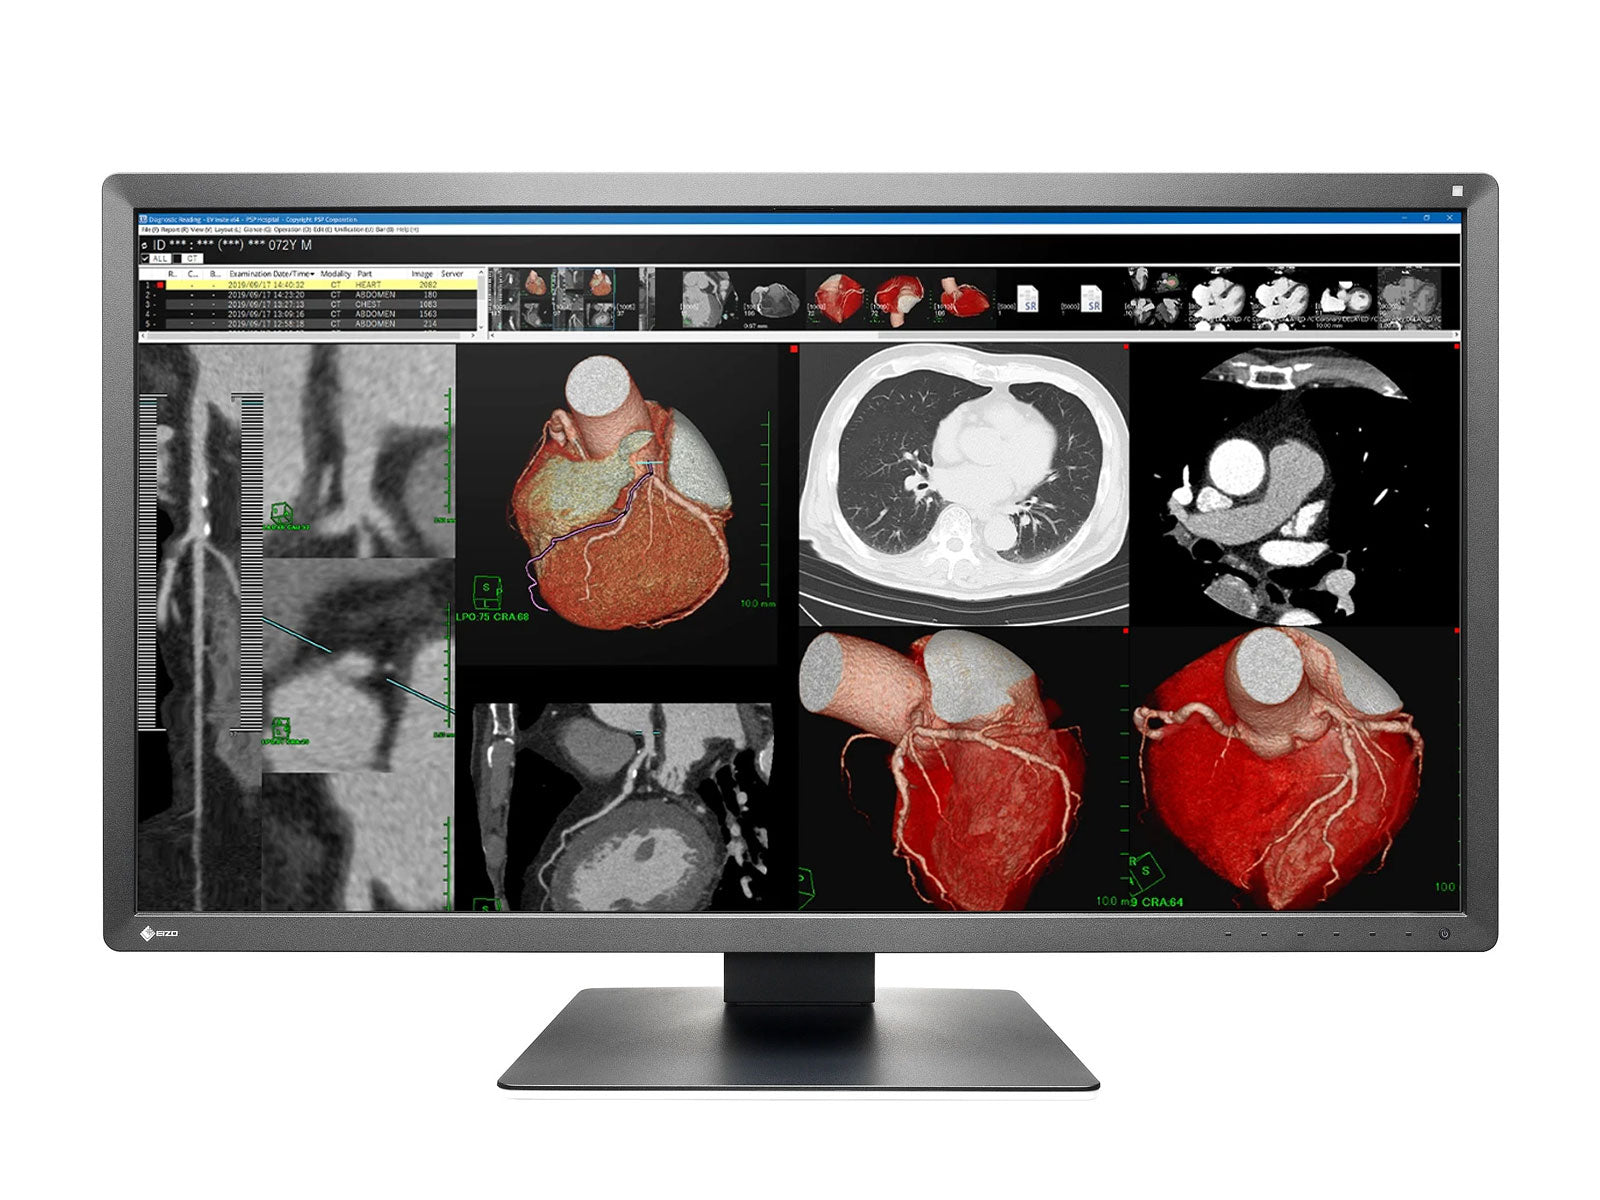 Eizo RadiForce MX317W 8MP 30.5" Color Clinical Review Display Monitor (MX317W-BK)